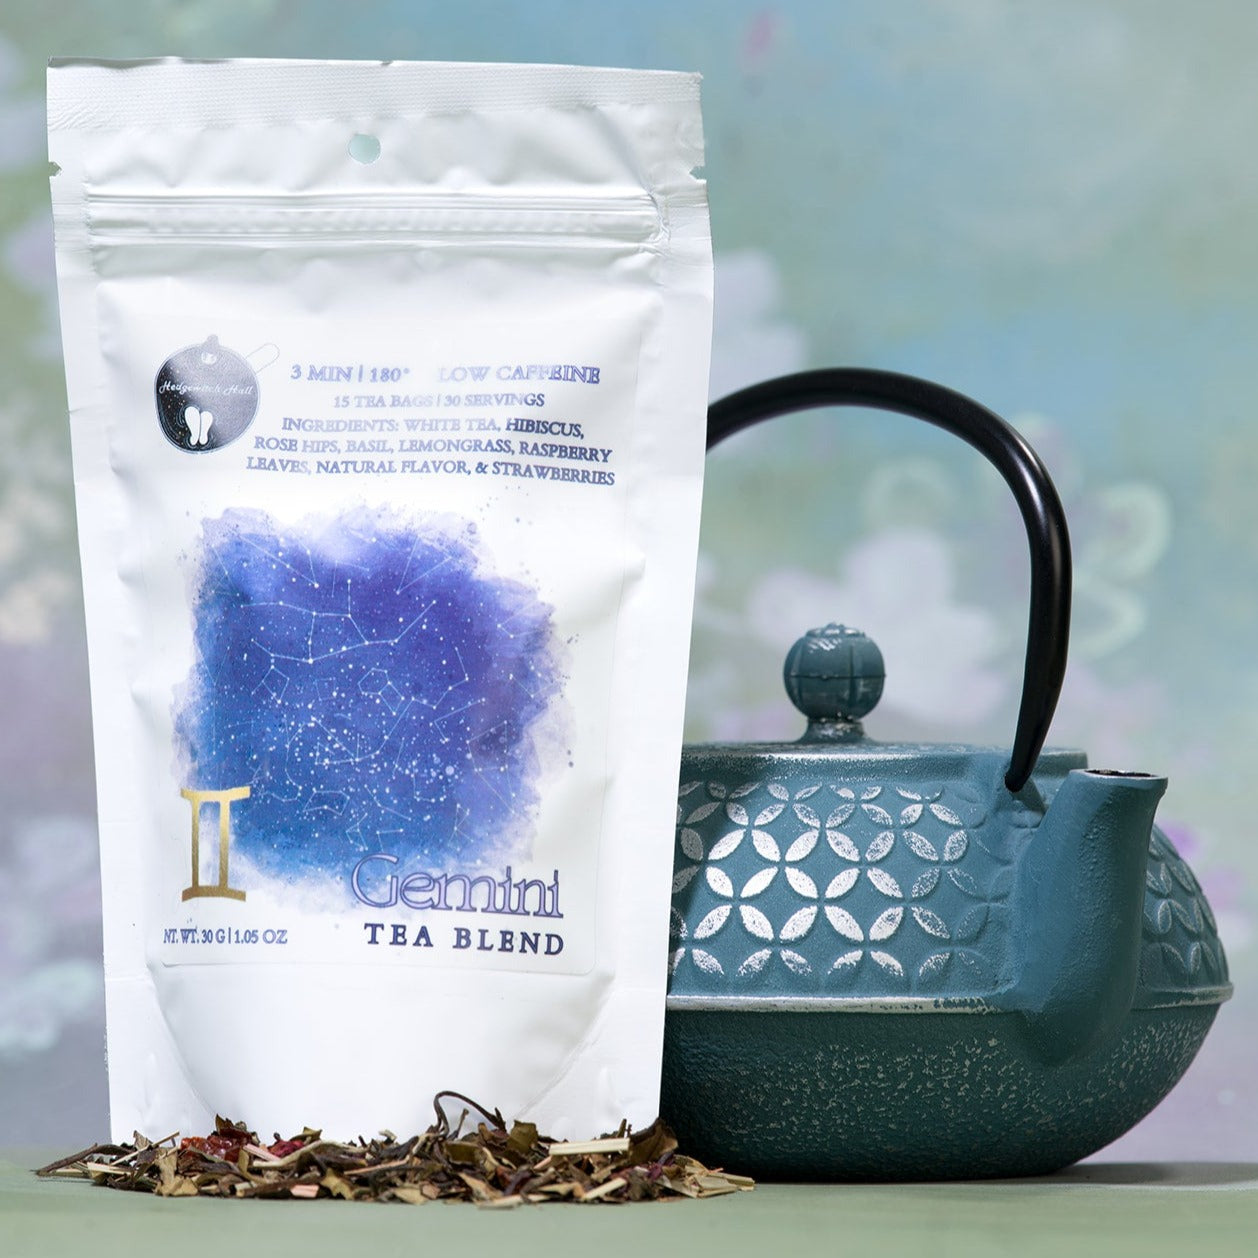 Product photo of Gemini tea blend and teal teapot.